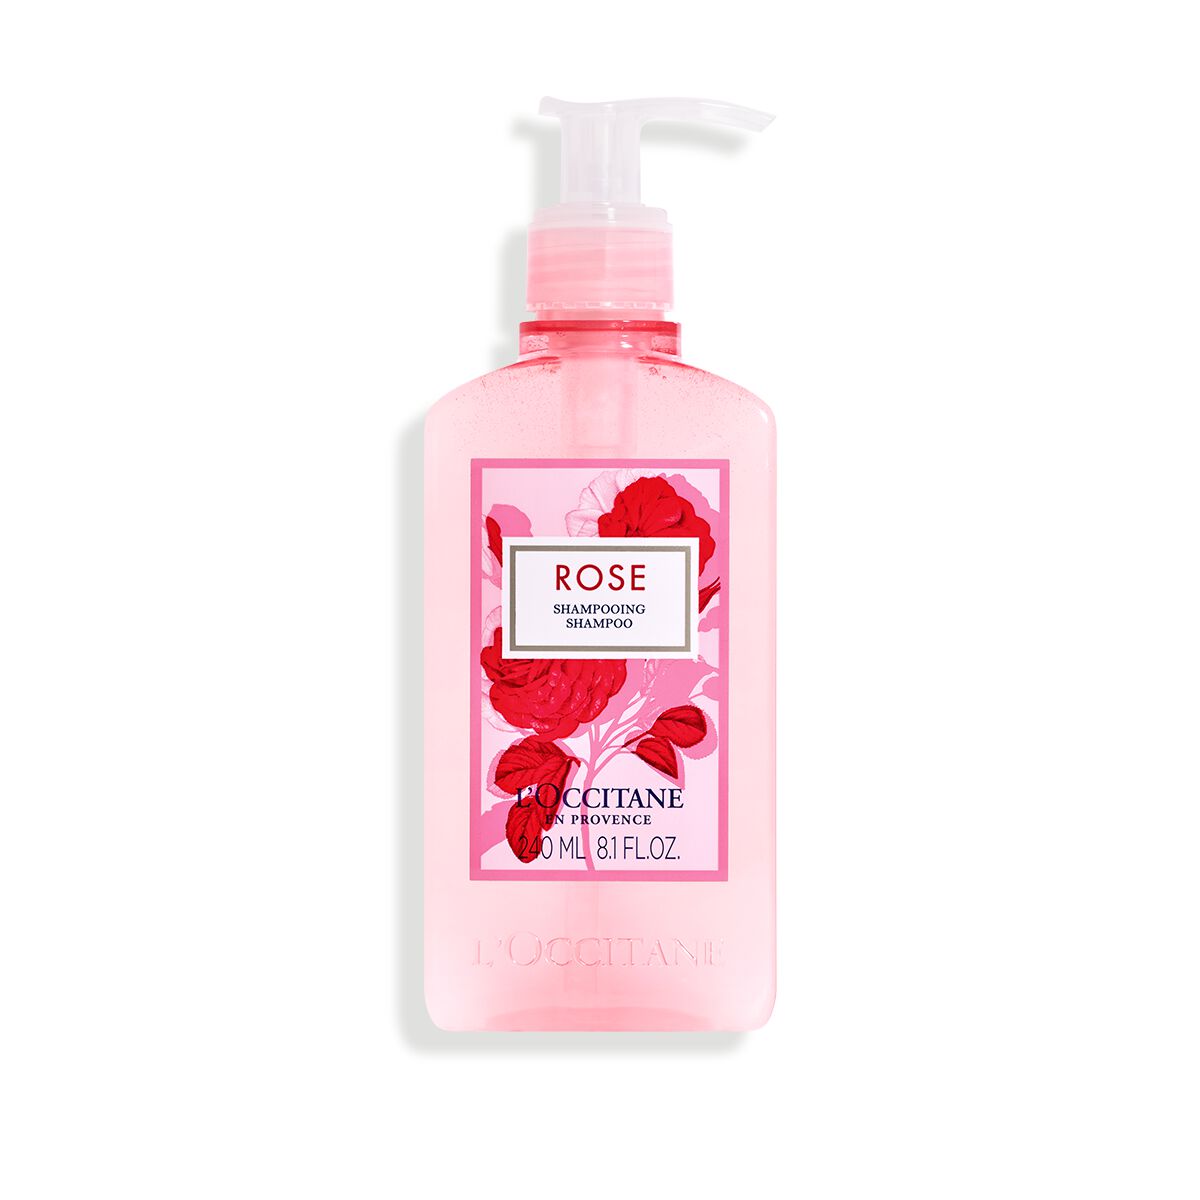 Rose Geparfumeerde Shampoo  240ml - L'Occitane en Provence